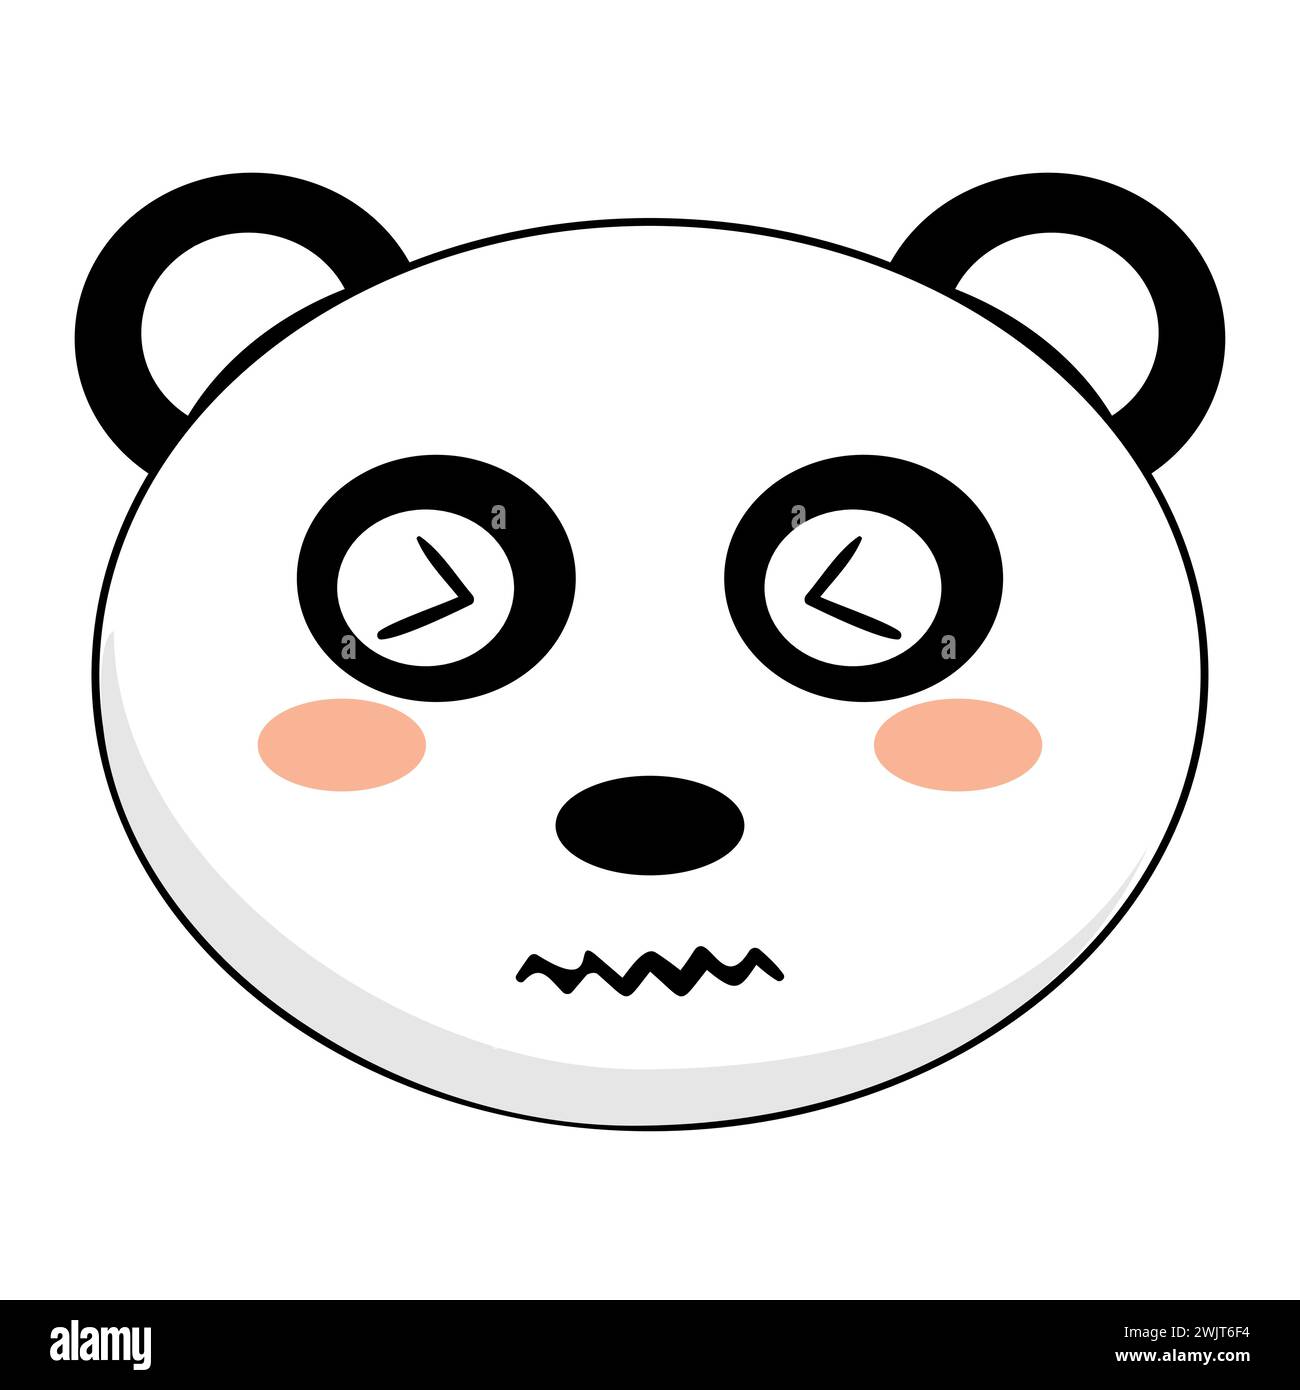 Premium Photo  Cute baby panda bear with big eyes 3d rendering cartoon  illustration